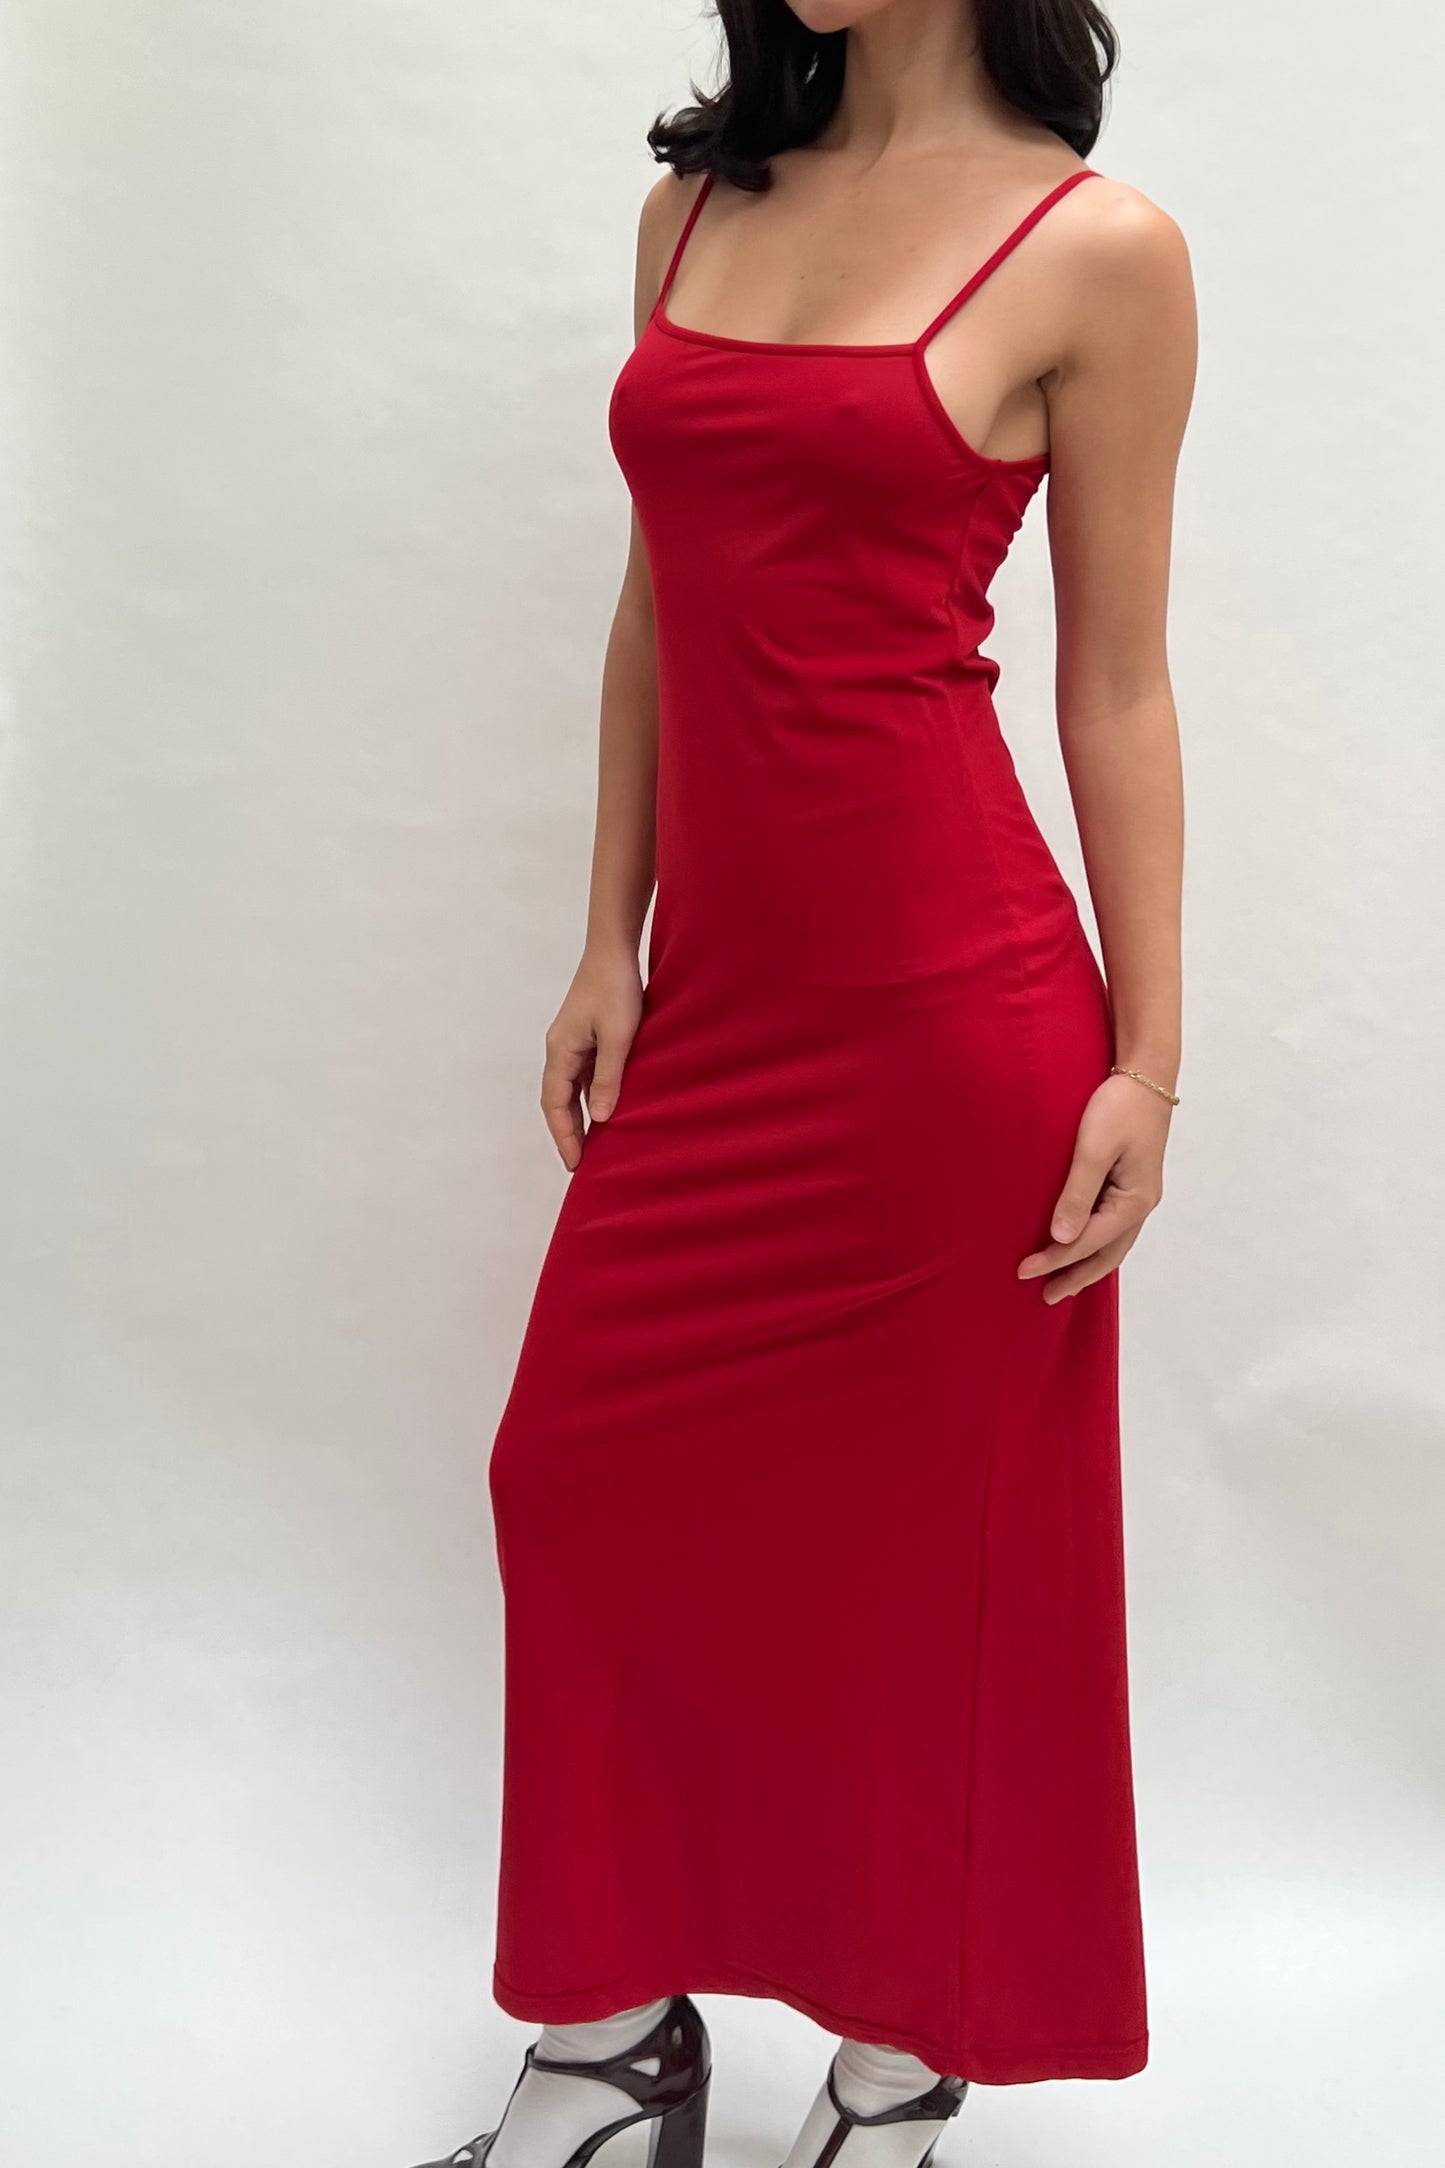 90s red dress